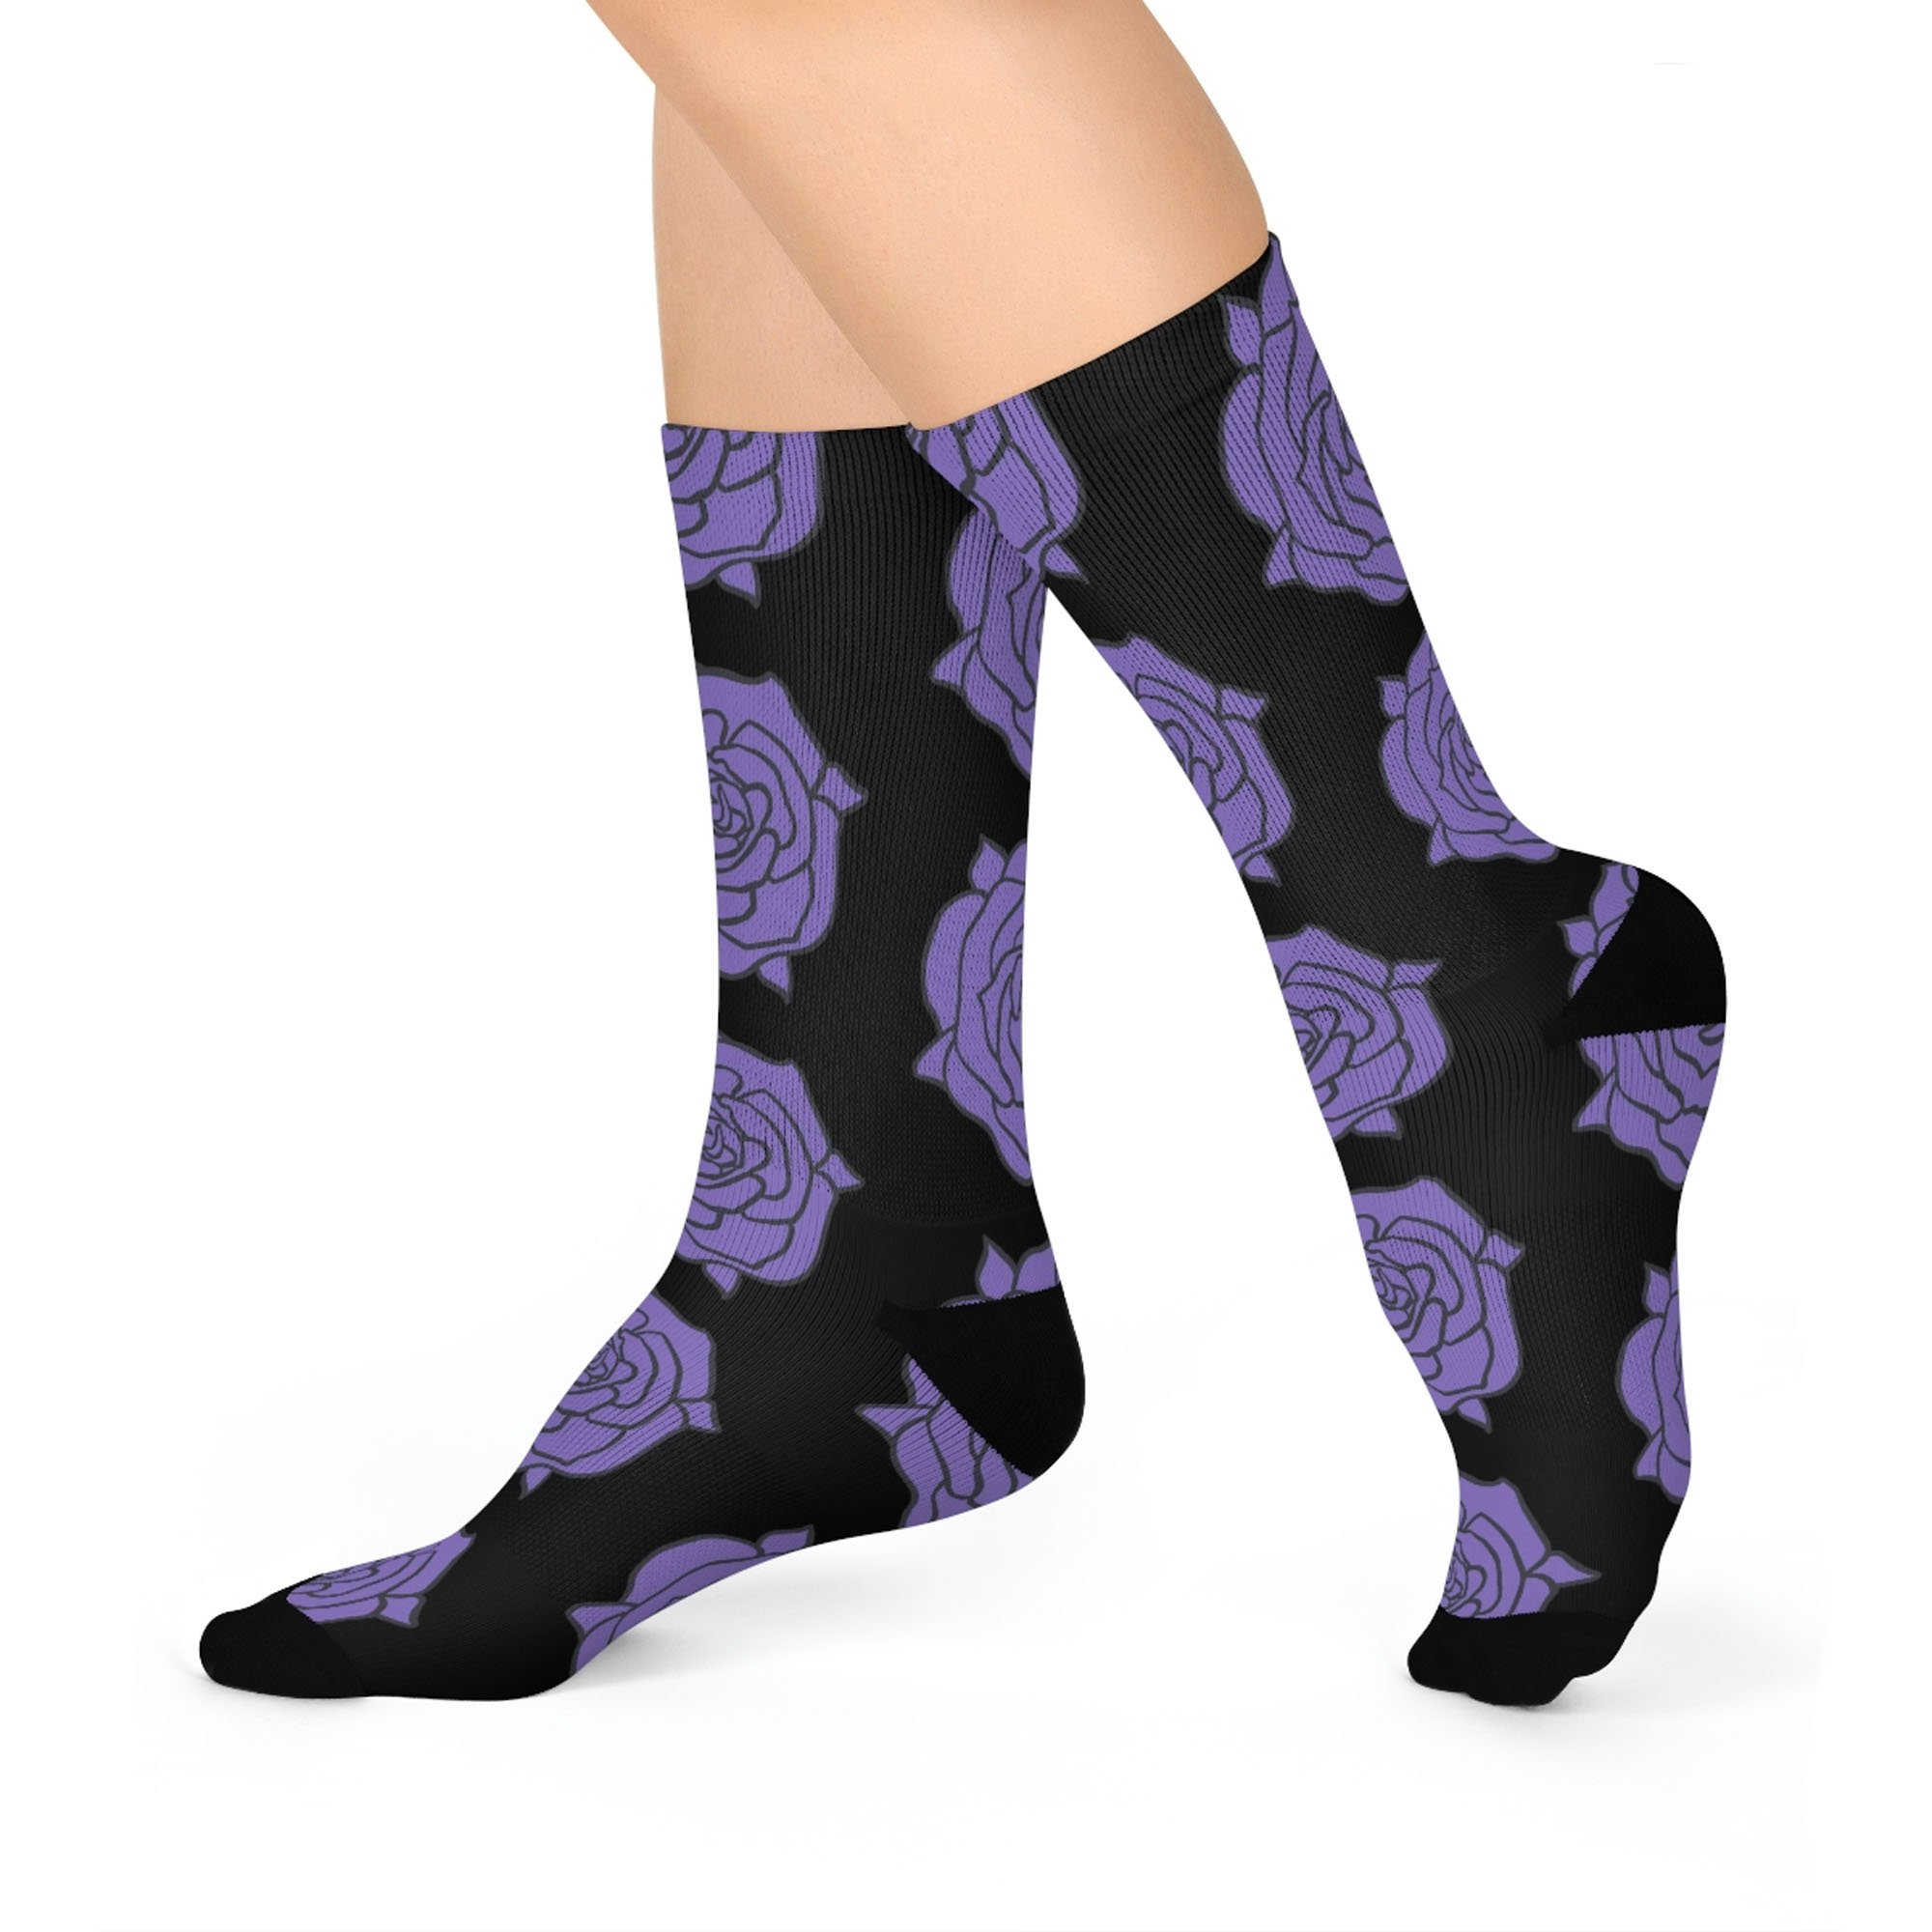 Gothic Purple Rose Socks -